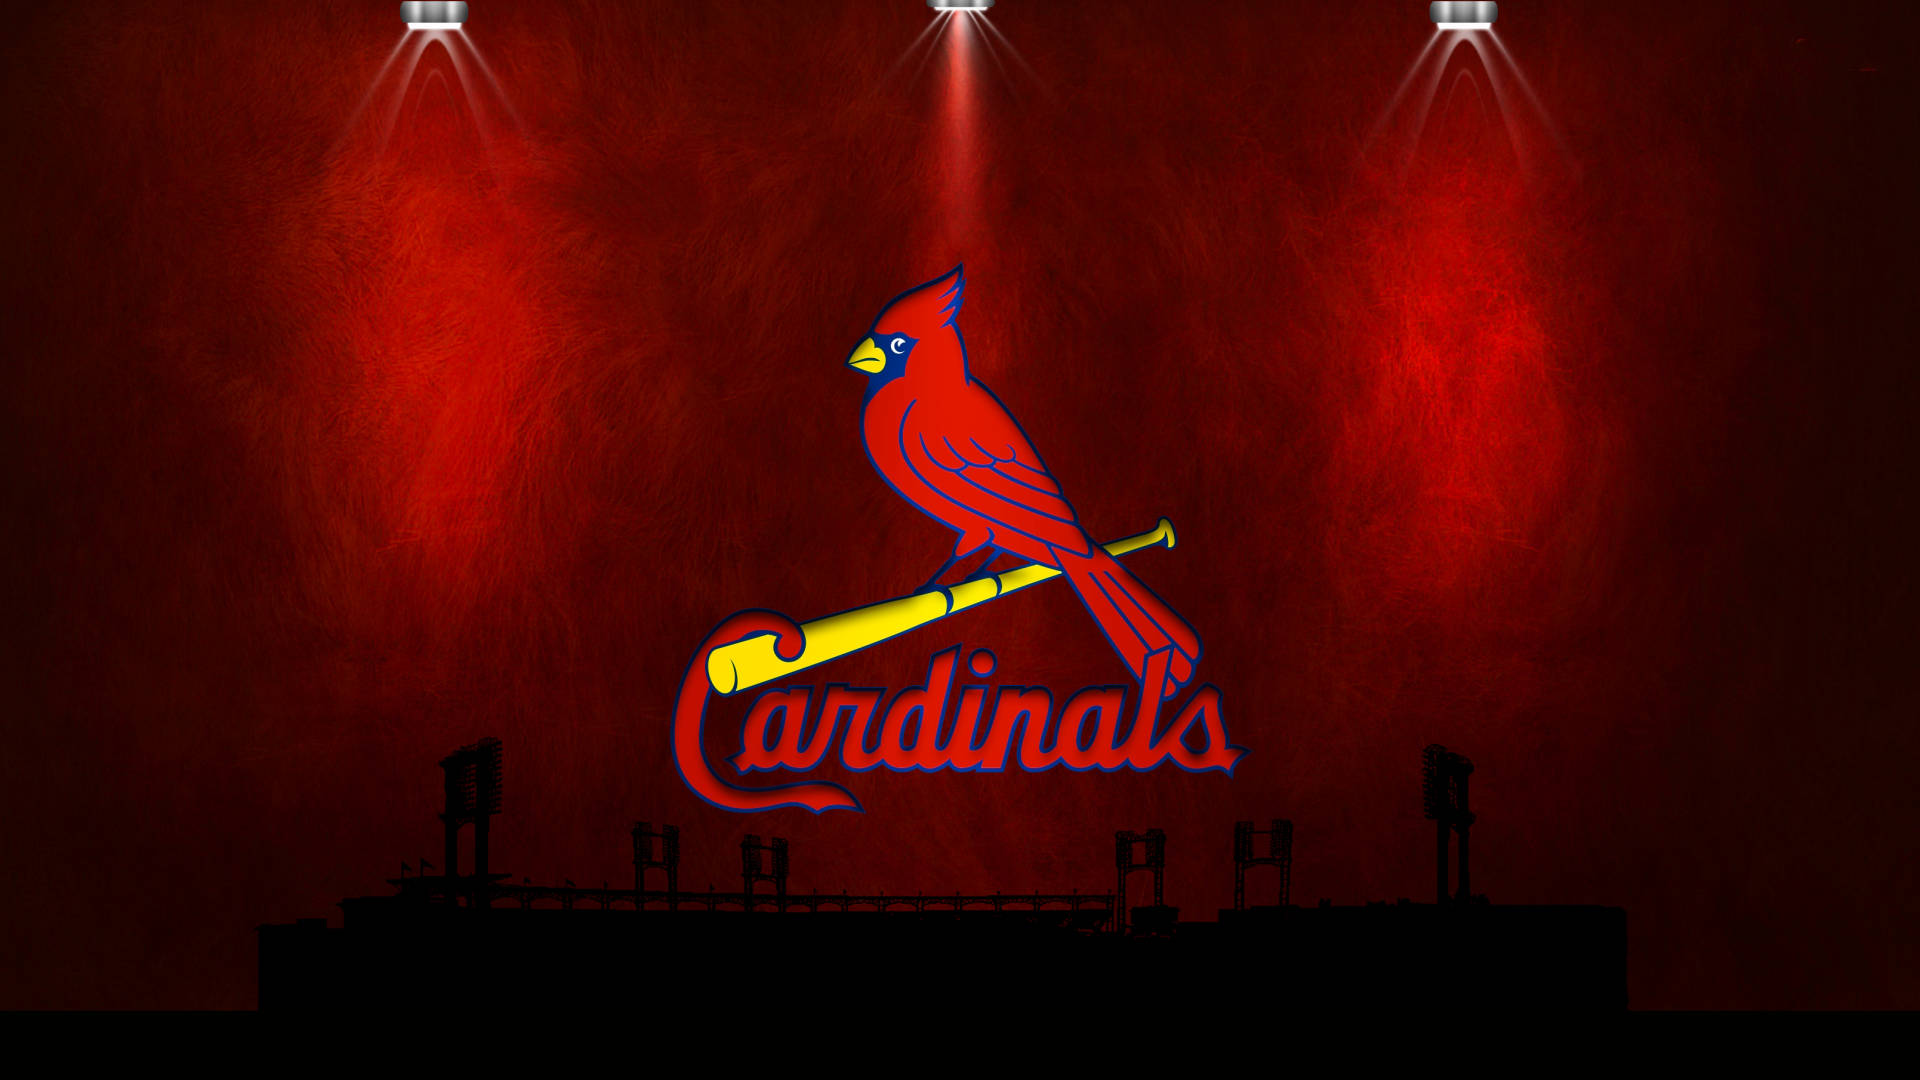 Intense Spotlight On The St.louis Cardinals Mascot Background